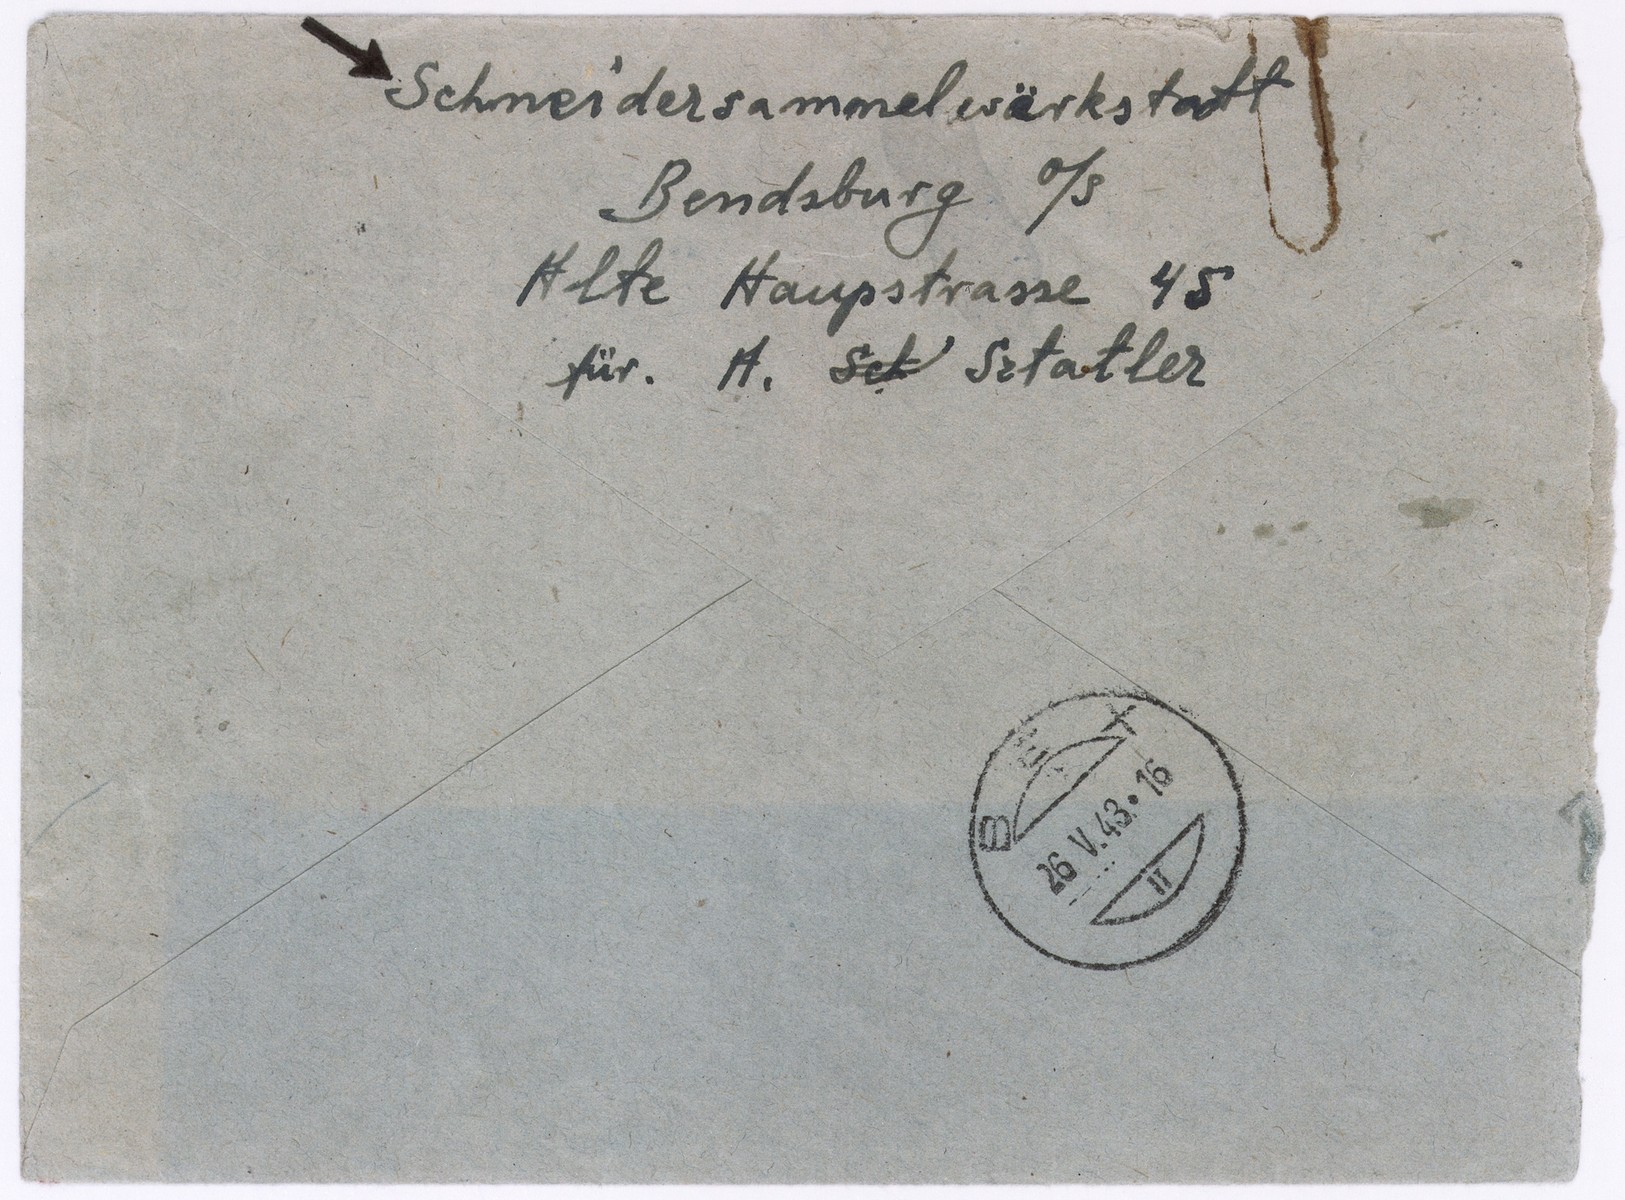 An envelope of a registered letter sent from  Sosnowiec  by A. Sztatler to Irene Schwartzbaum in Bax, Switzerland.  The return address of the sender or senders states: tailors workshop, Bedzin, Alte Haupstrasse 45.